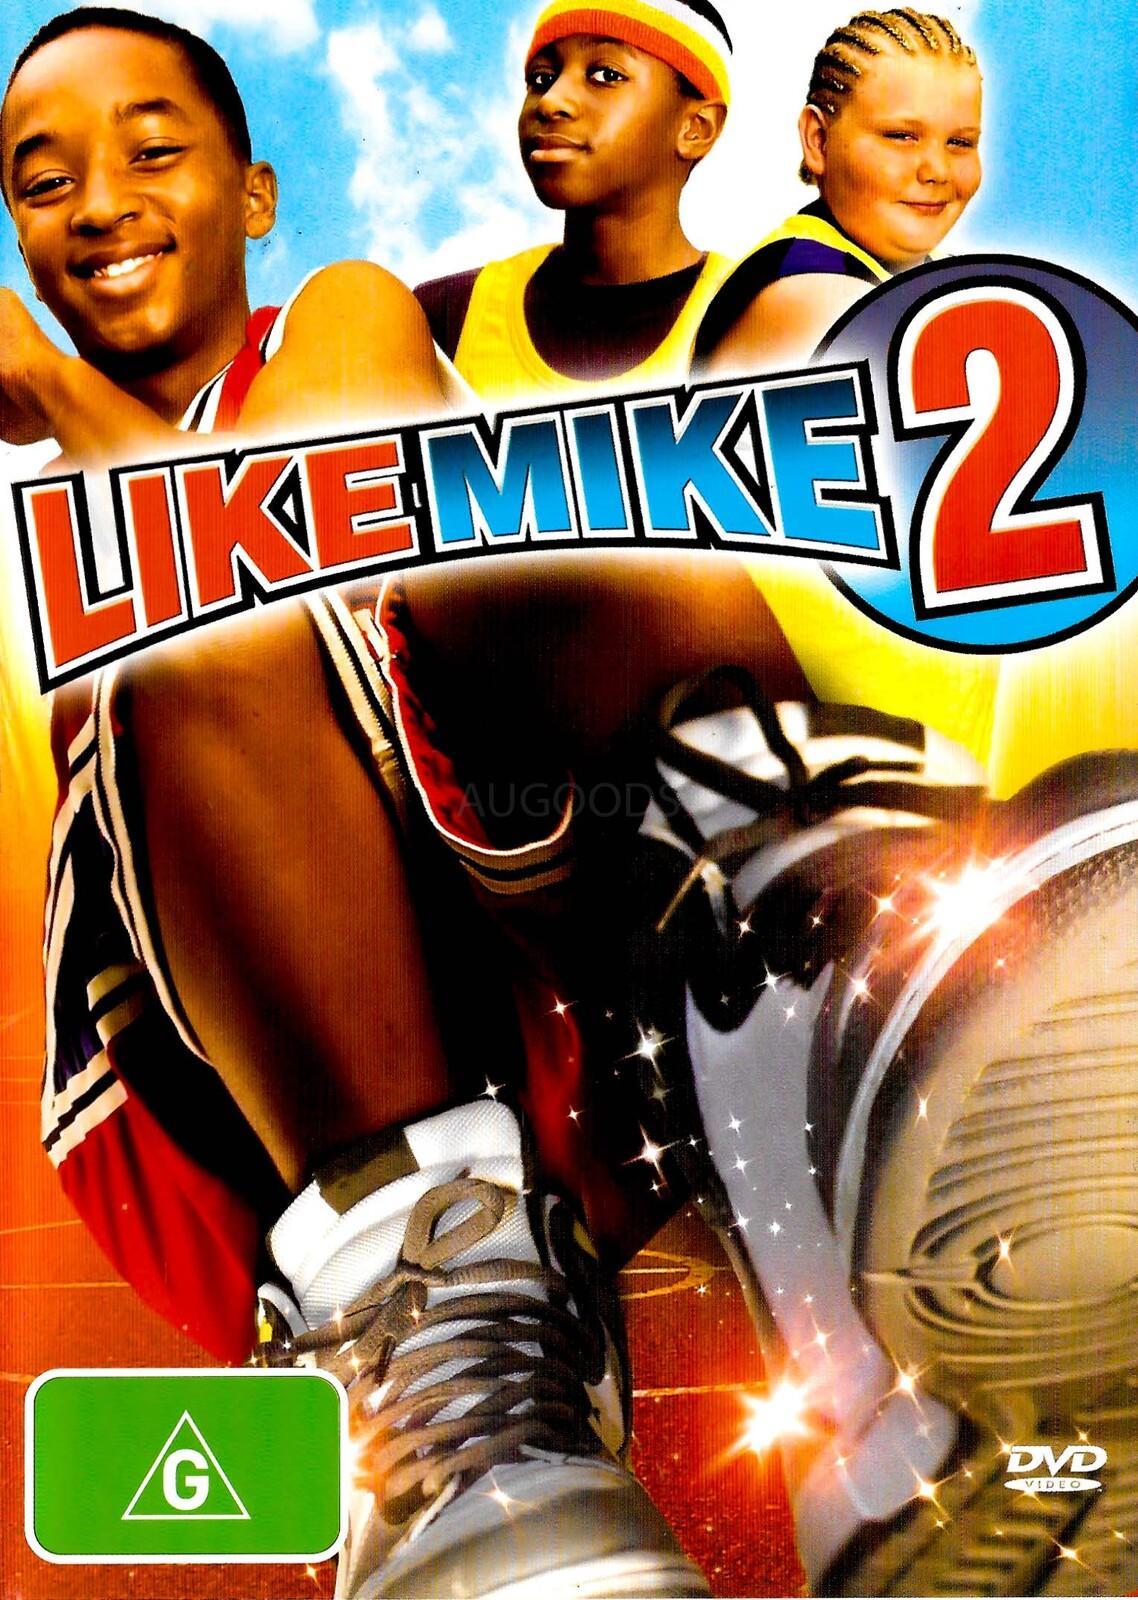 LIKE MIKE - 2 -Rare DVD Aus Stock Comedy New Region 4